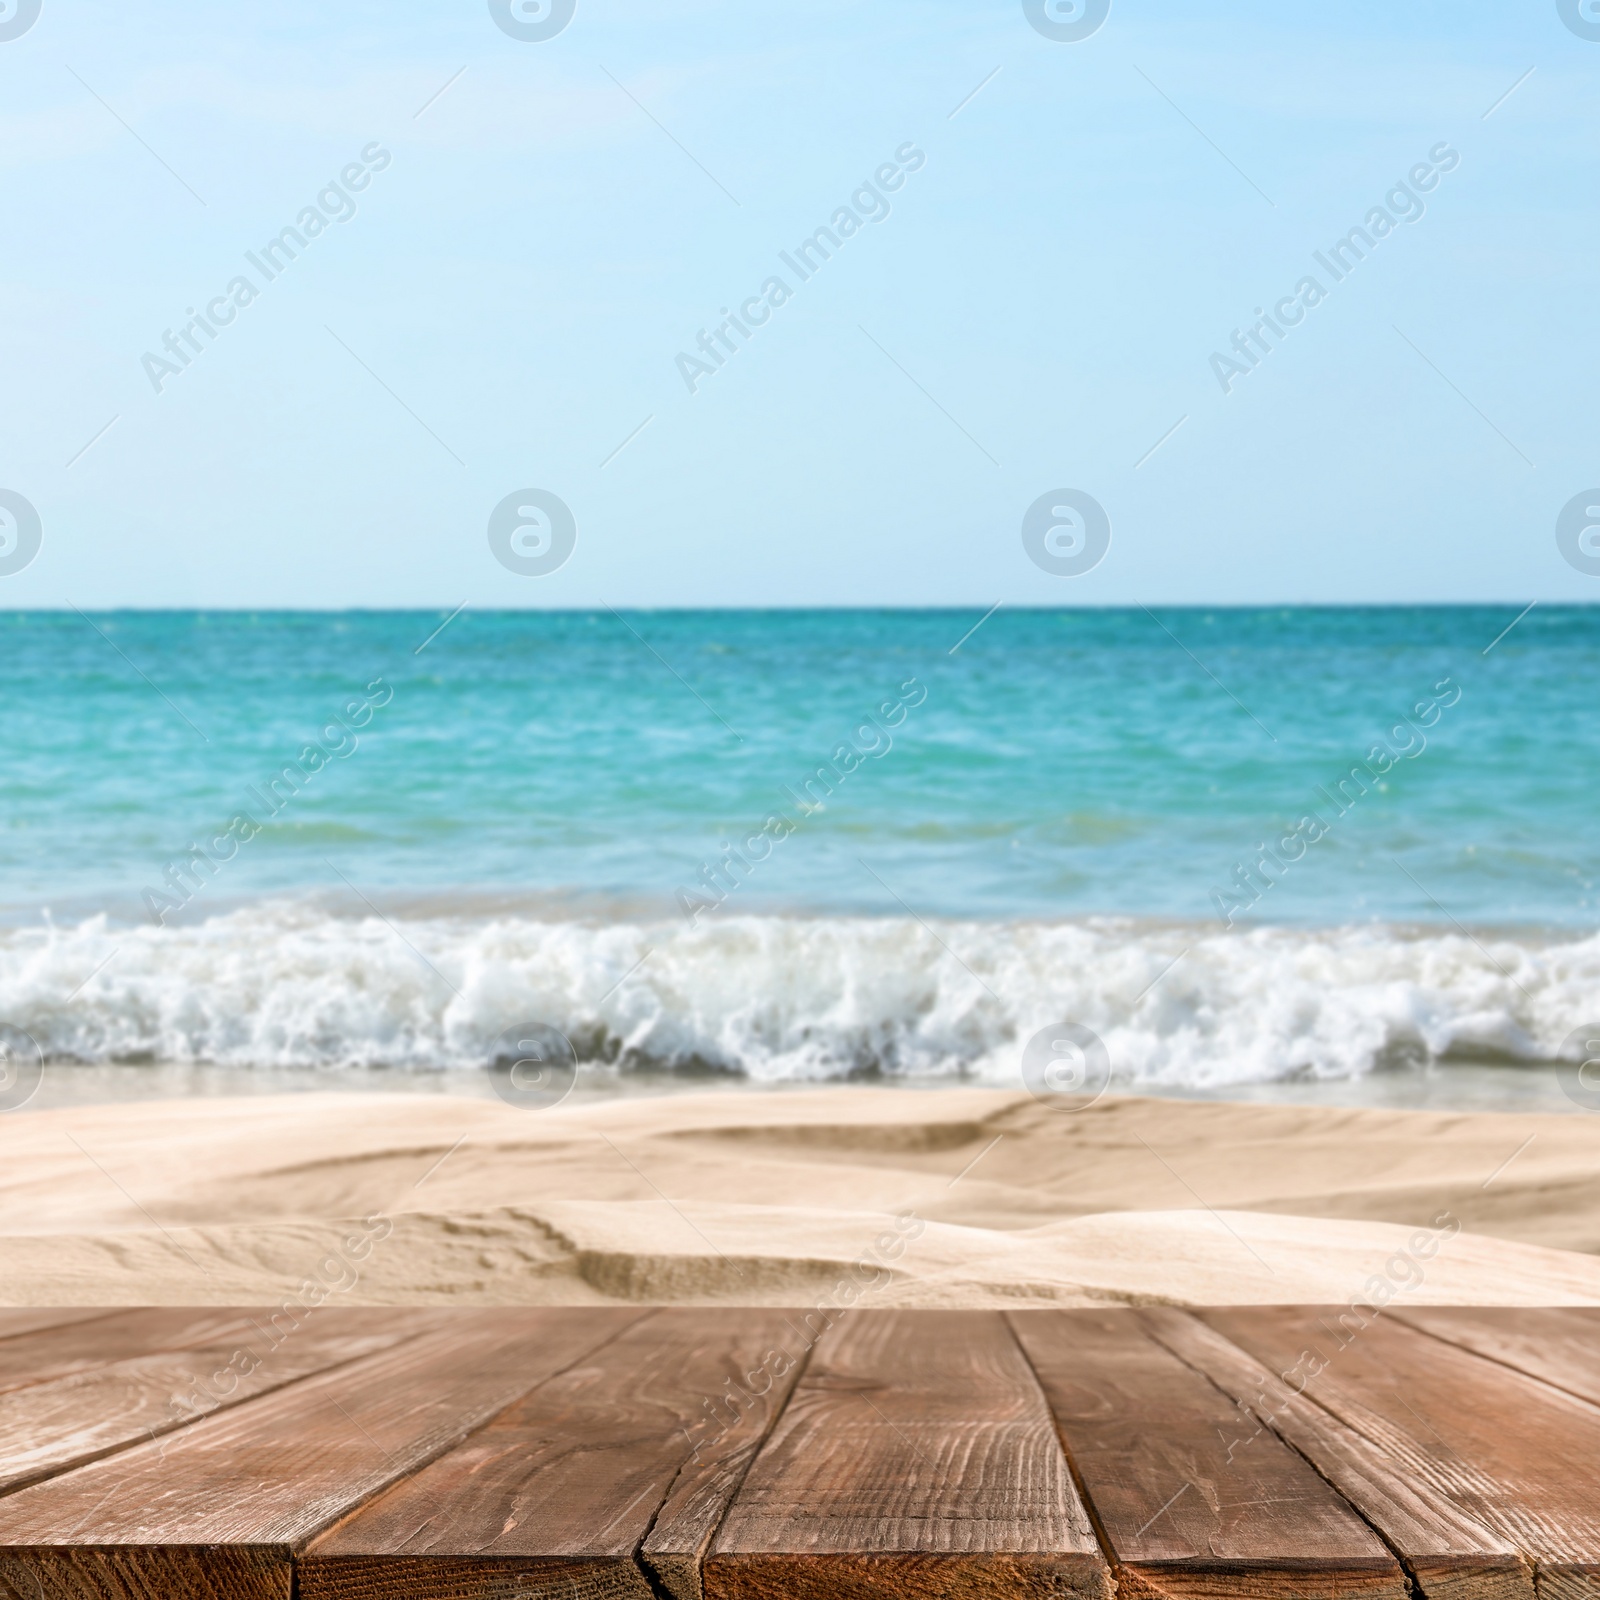 Image of Wooden surface on sandy beach near ocean